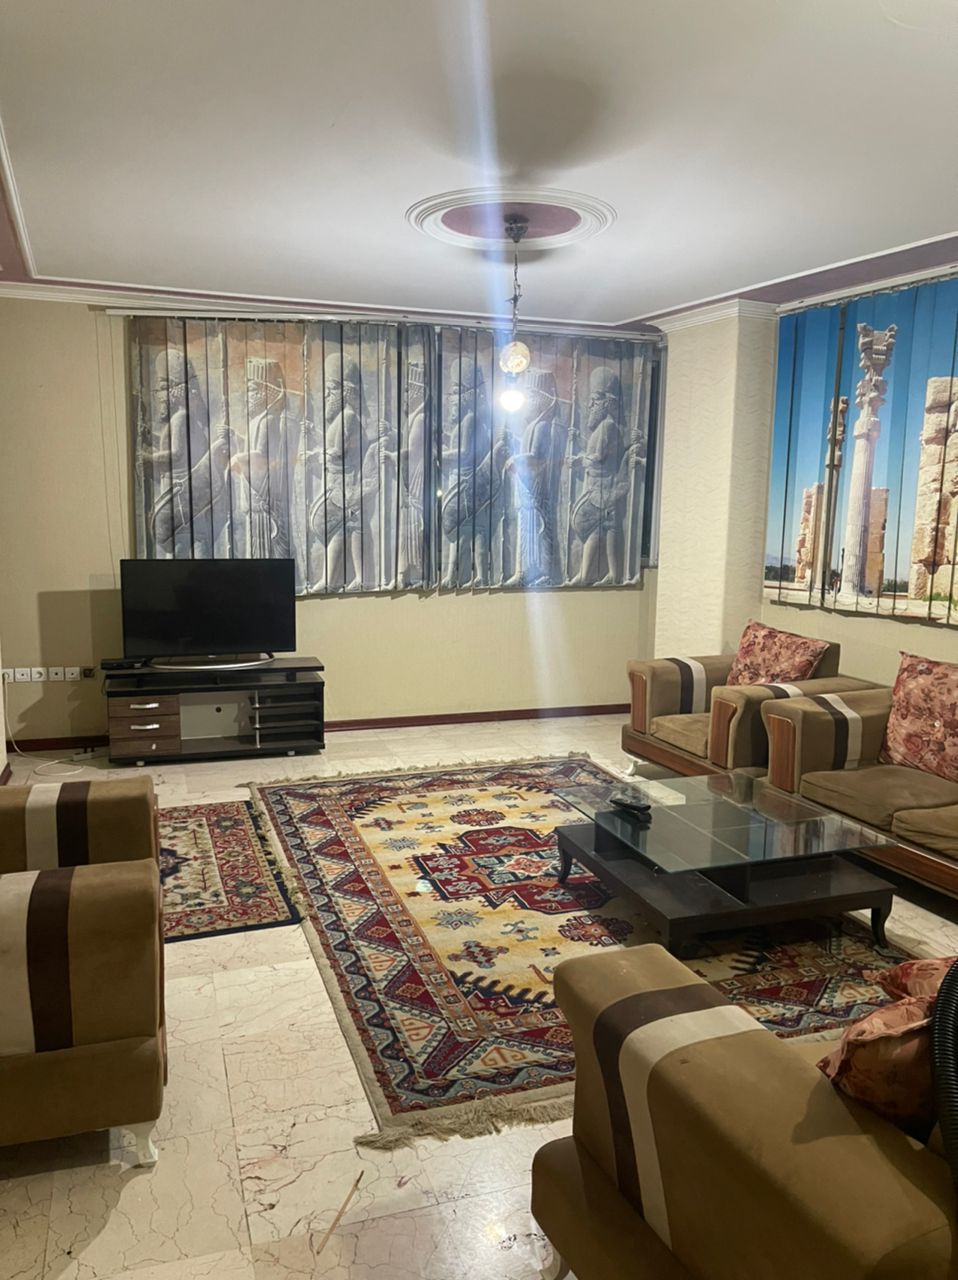 townee اجاره آپارتمان مبله در میرداماد تهران